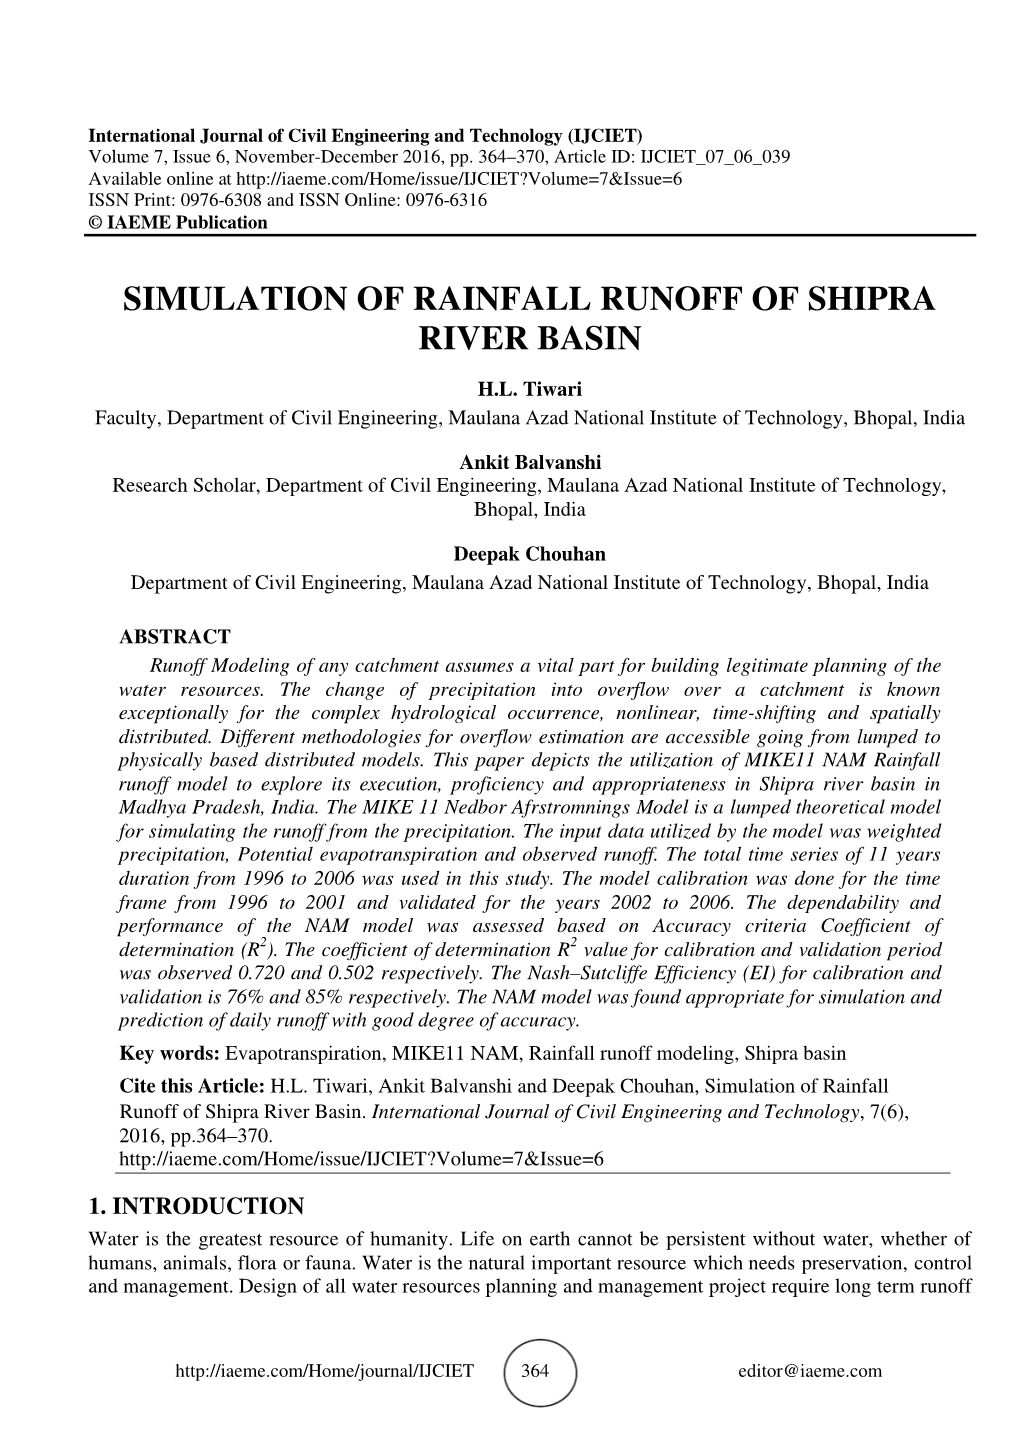 Simulation of Rainfall Runoff of Shipra River Basin